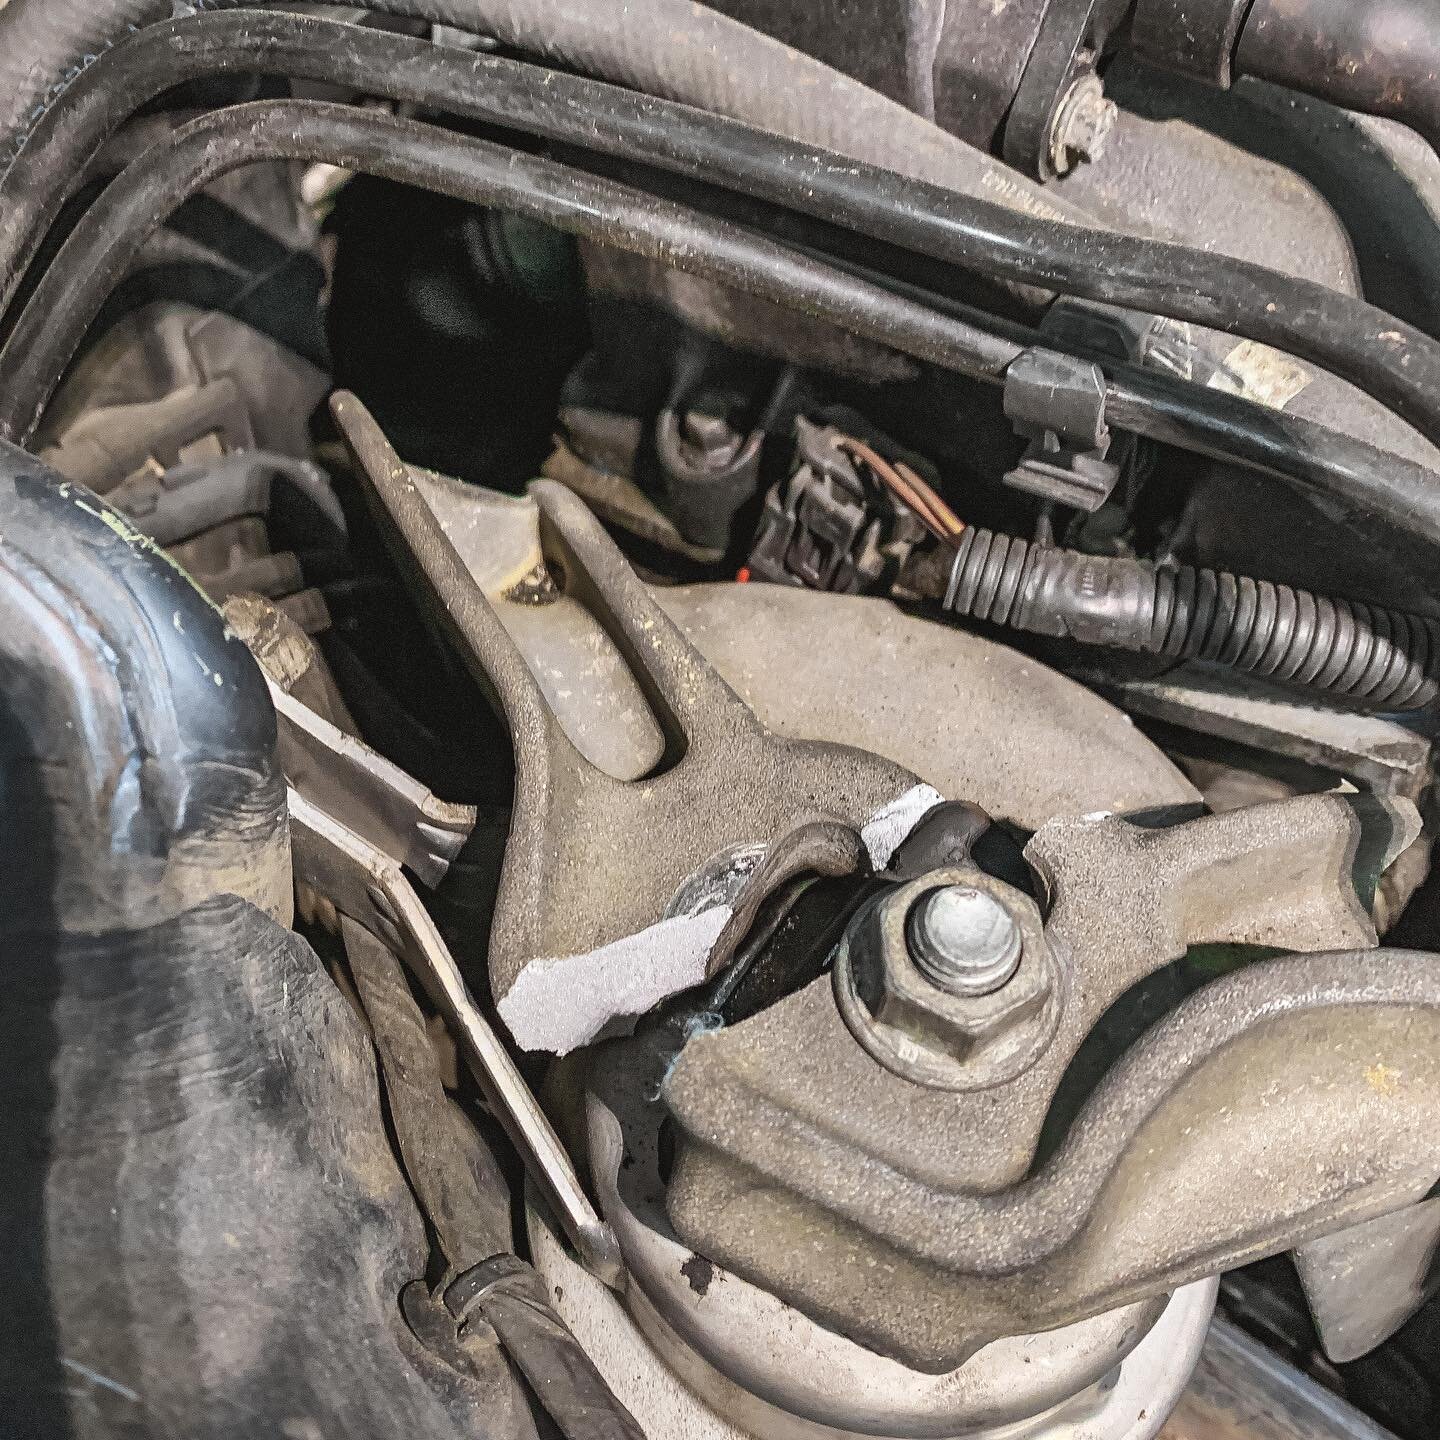 Talk about bad vibrations 😳

New engine mount arm incoming for this r50 Mini Cooper
.
.
.
#r50 #r50mini #minicooper #minicooperworld #inlineautowerks #automotivetechnician #automotive #carsofinstagram #autotech #charlottenc #autorepair #bmwtech 
#ca